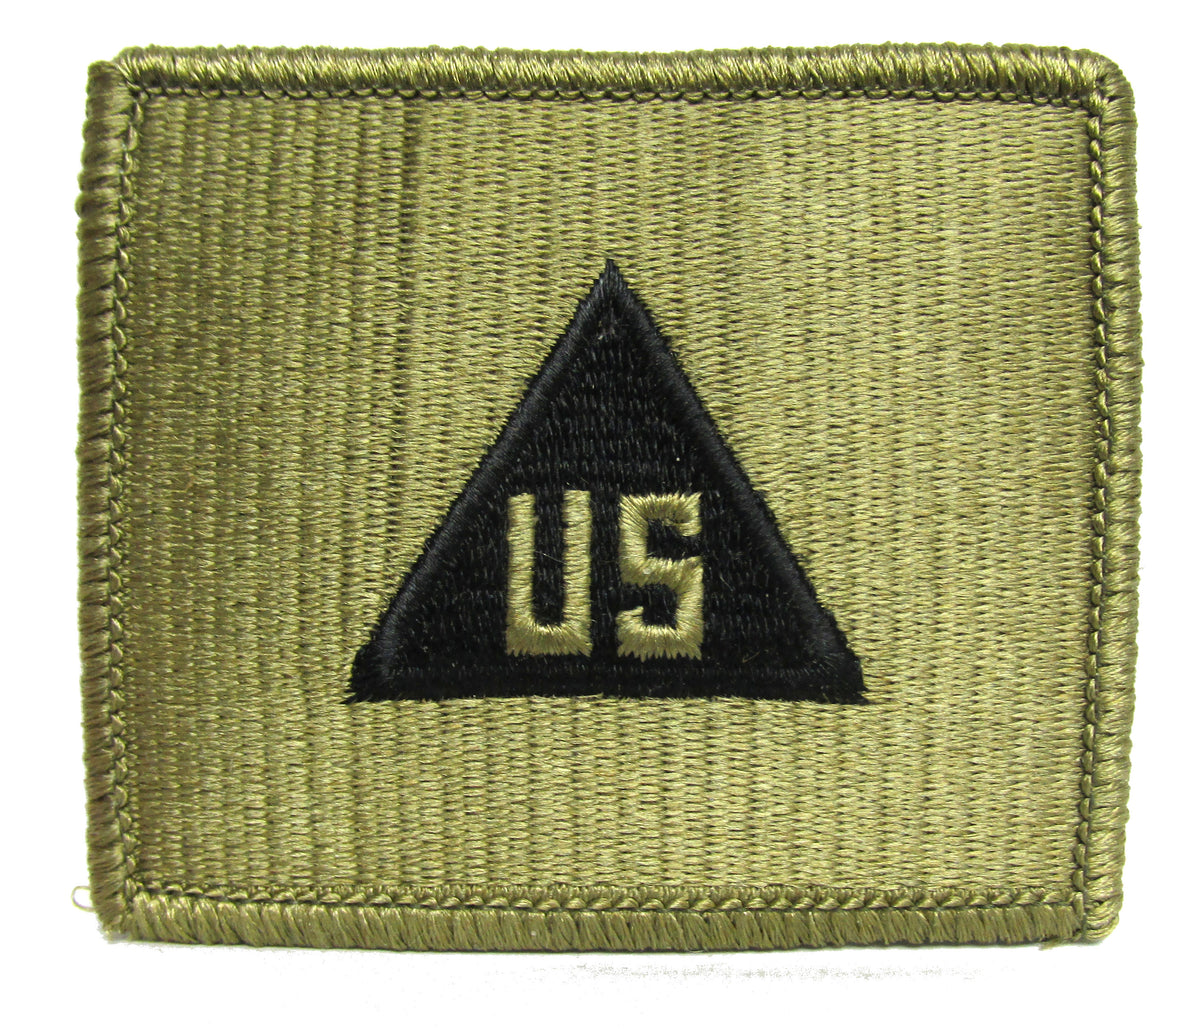 U.S. Civilian with Black Triangle OCP Patch